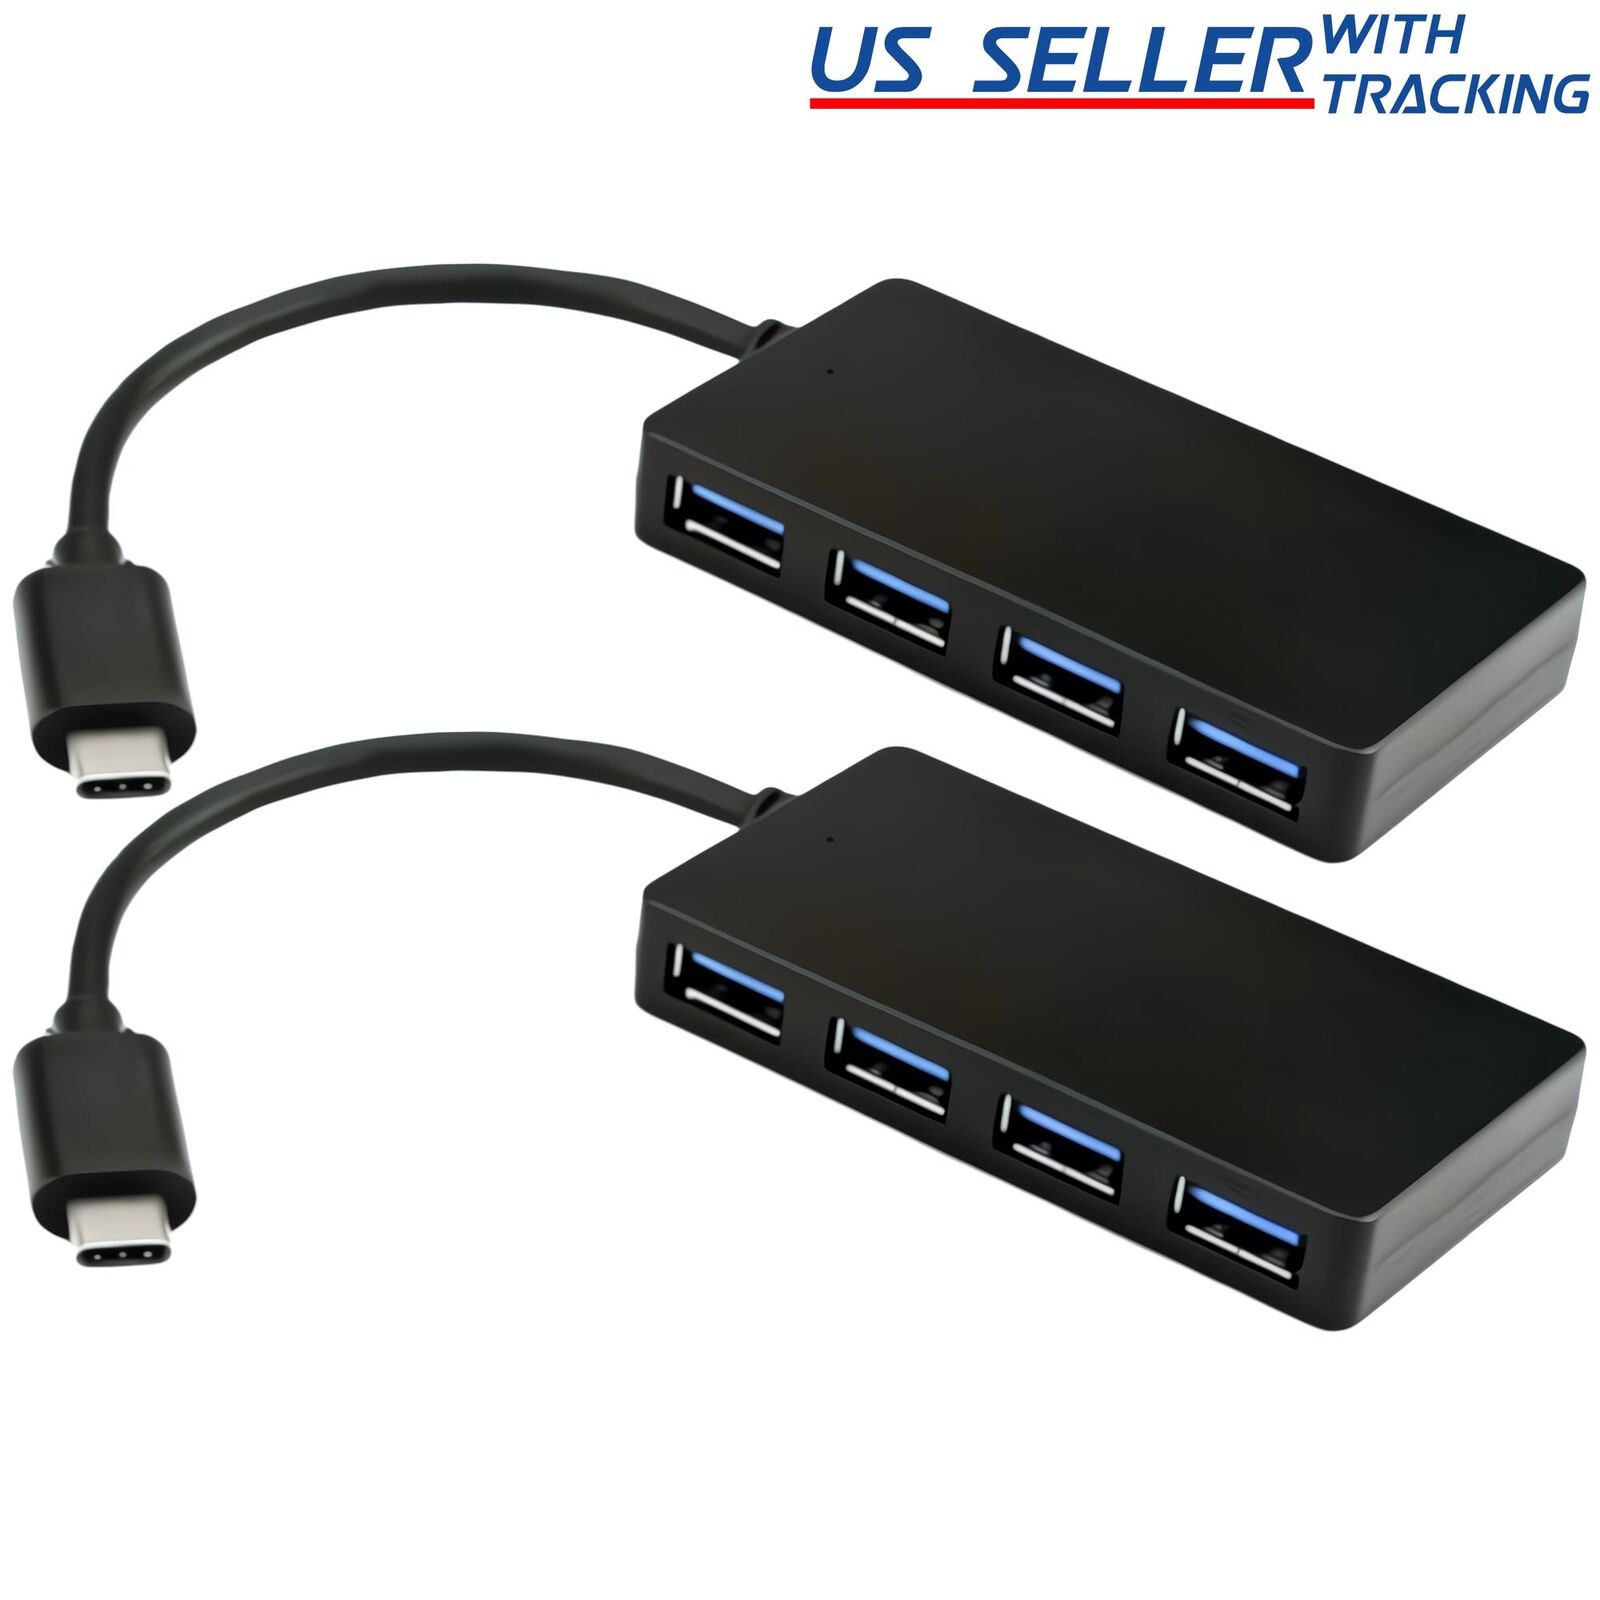 2pcs USB 3.2 Type-C 4-Port Hub with Super Speed Data Transfer 5Gbps 3.0 PC Mac